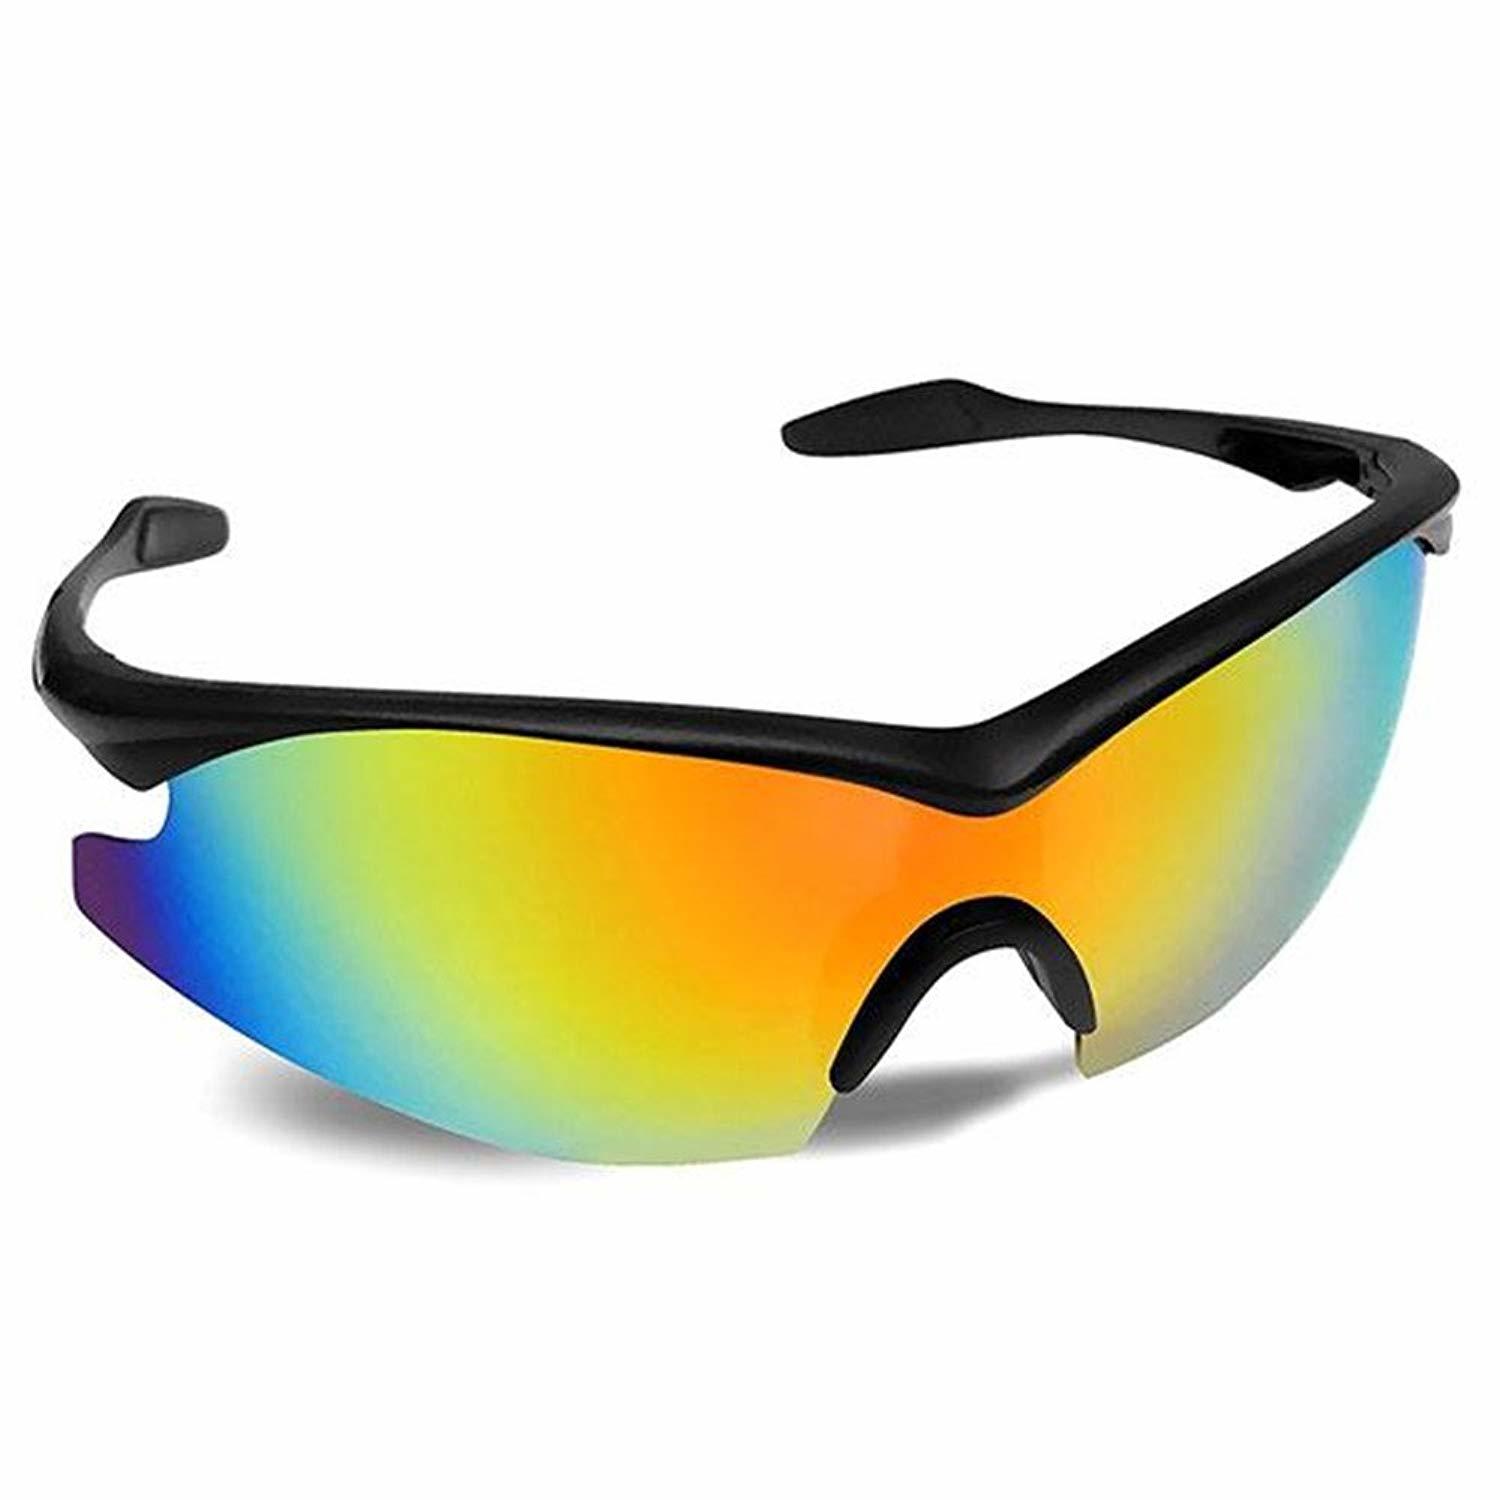 Polarized Sports Sunglasses Sport Glasses Battle Vision Hd Sunglasses For Riding Sunglasses 